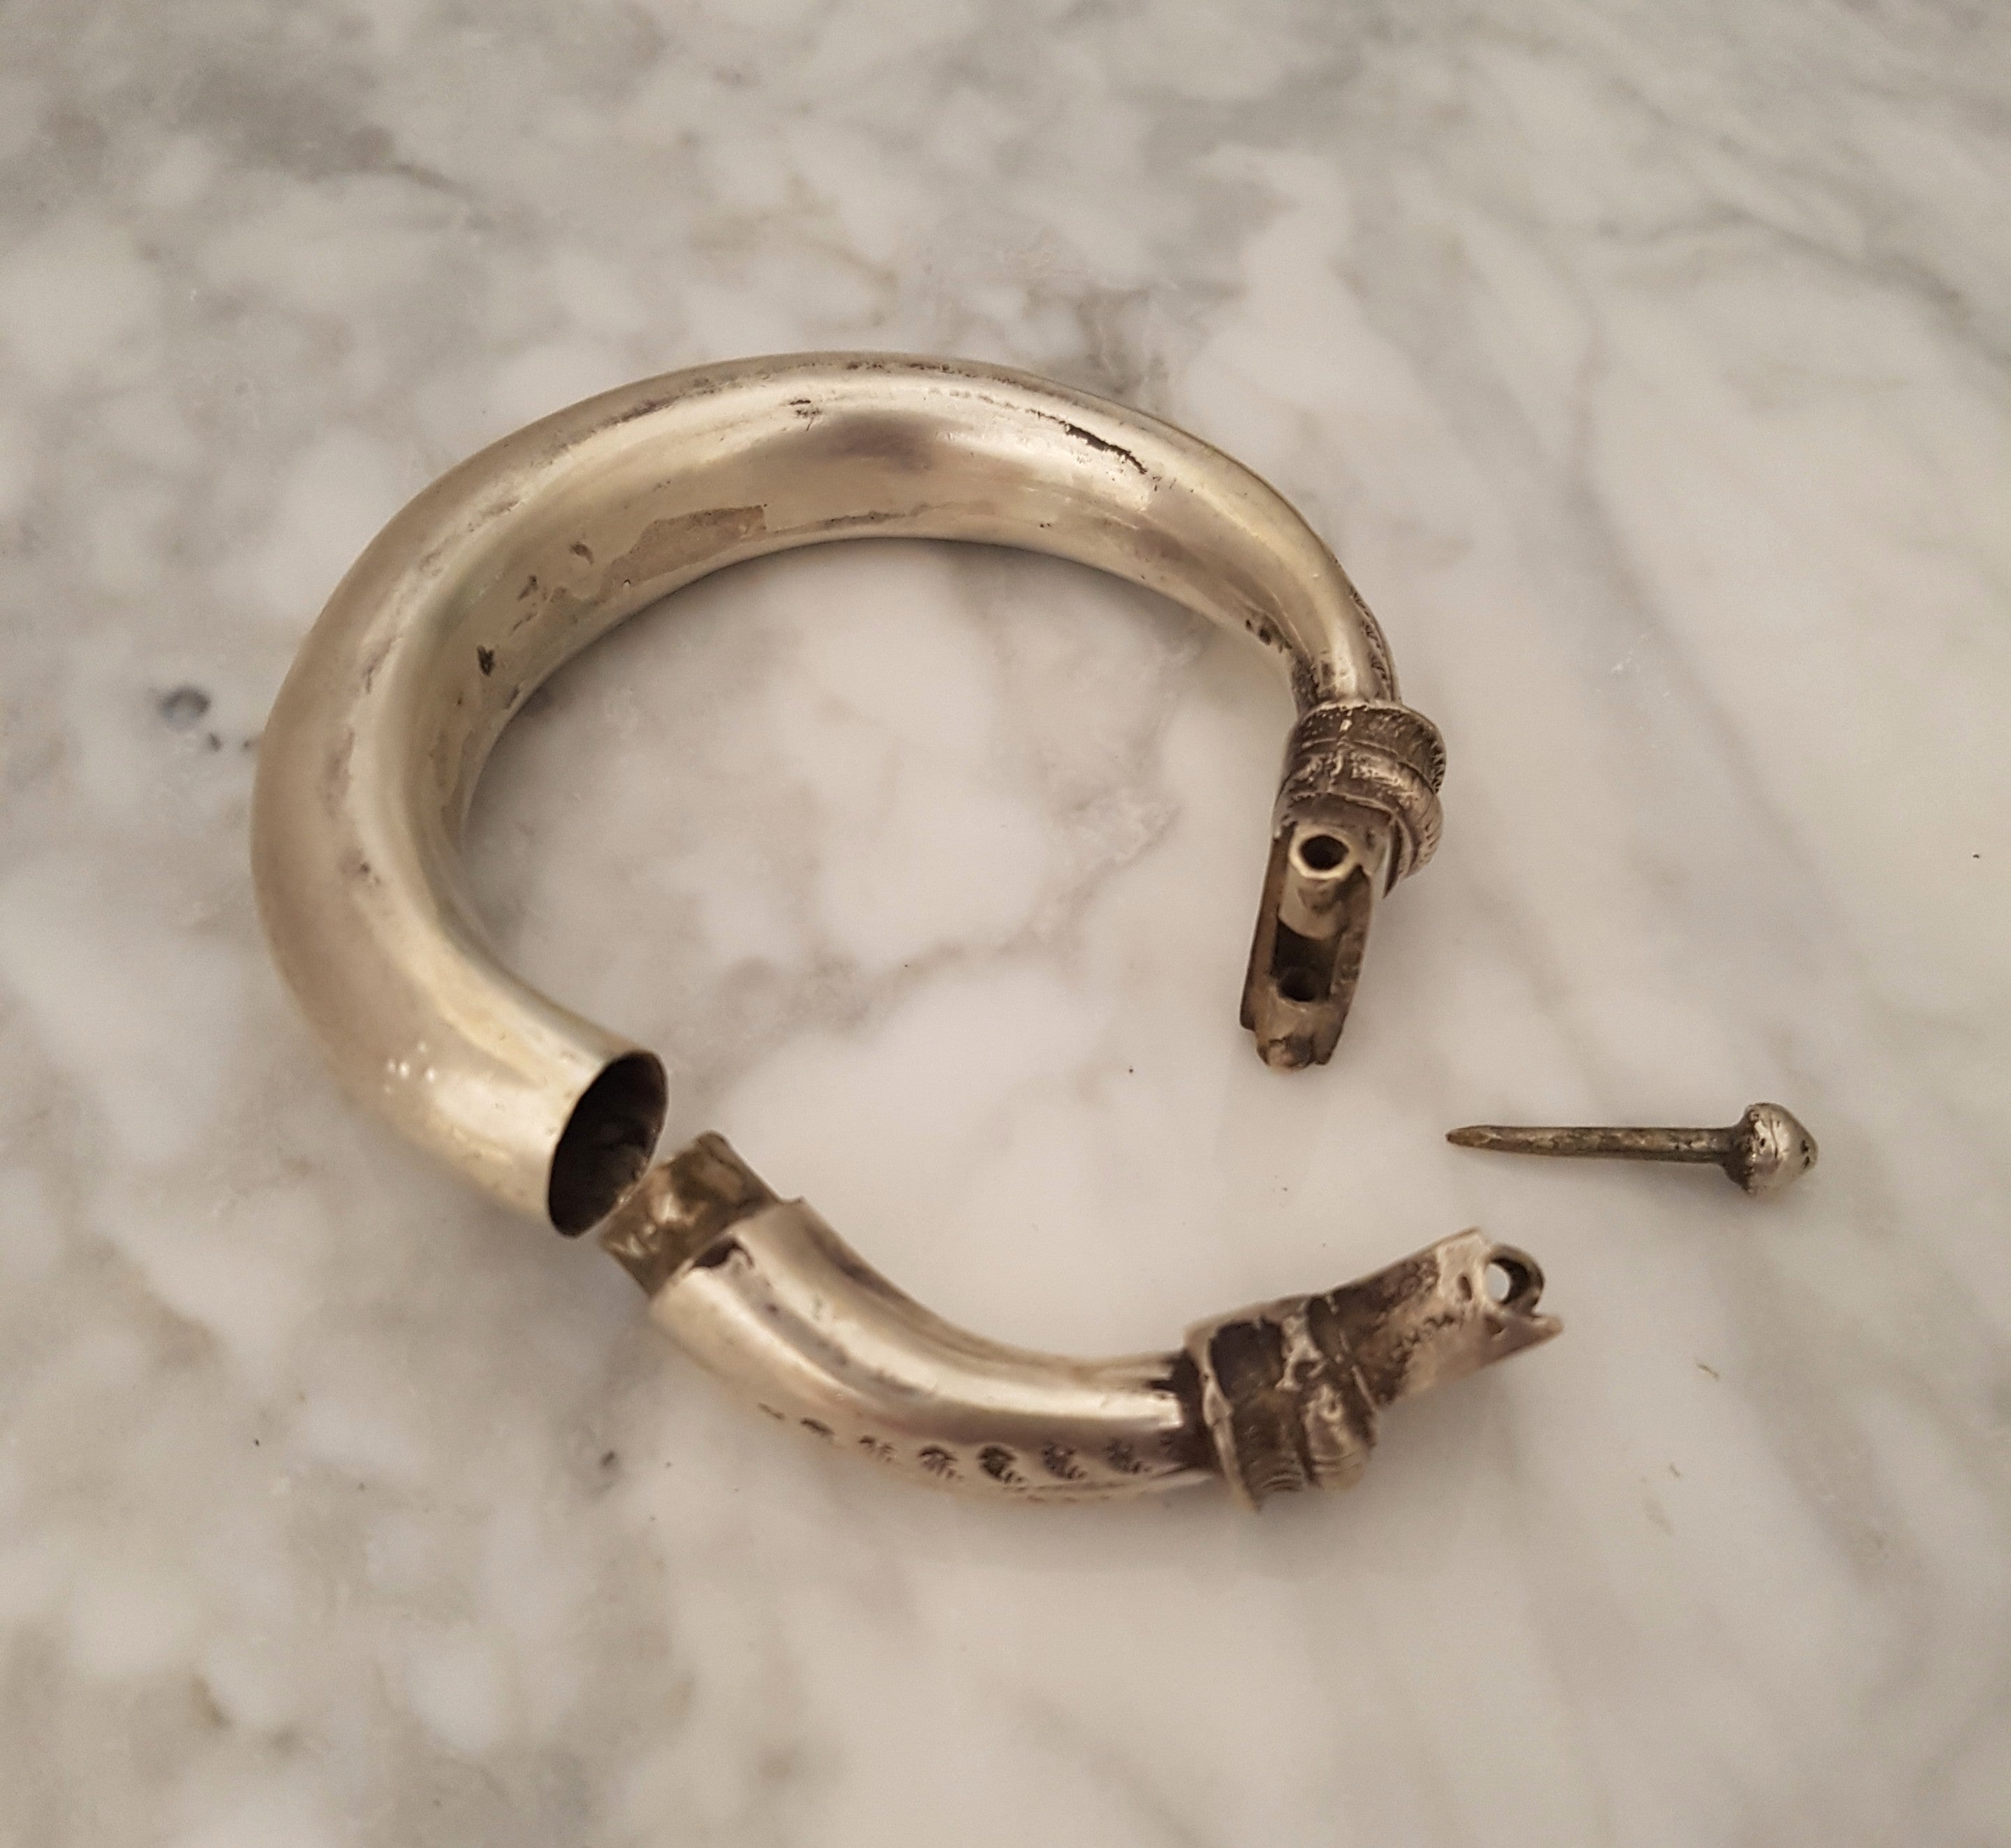 Reserved for S. -  Old Rajasthani Silver Bracelet